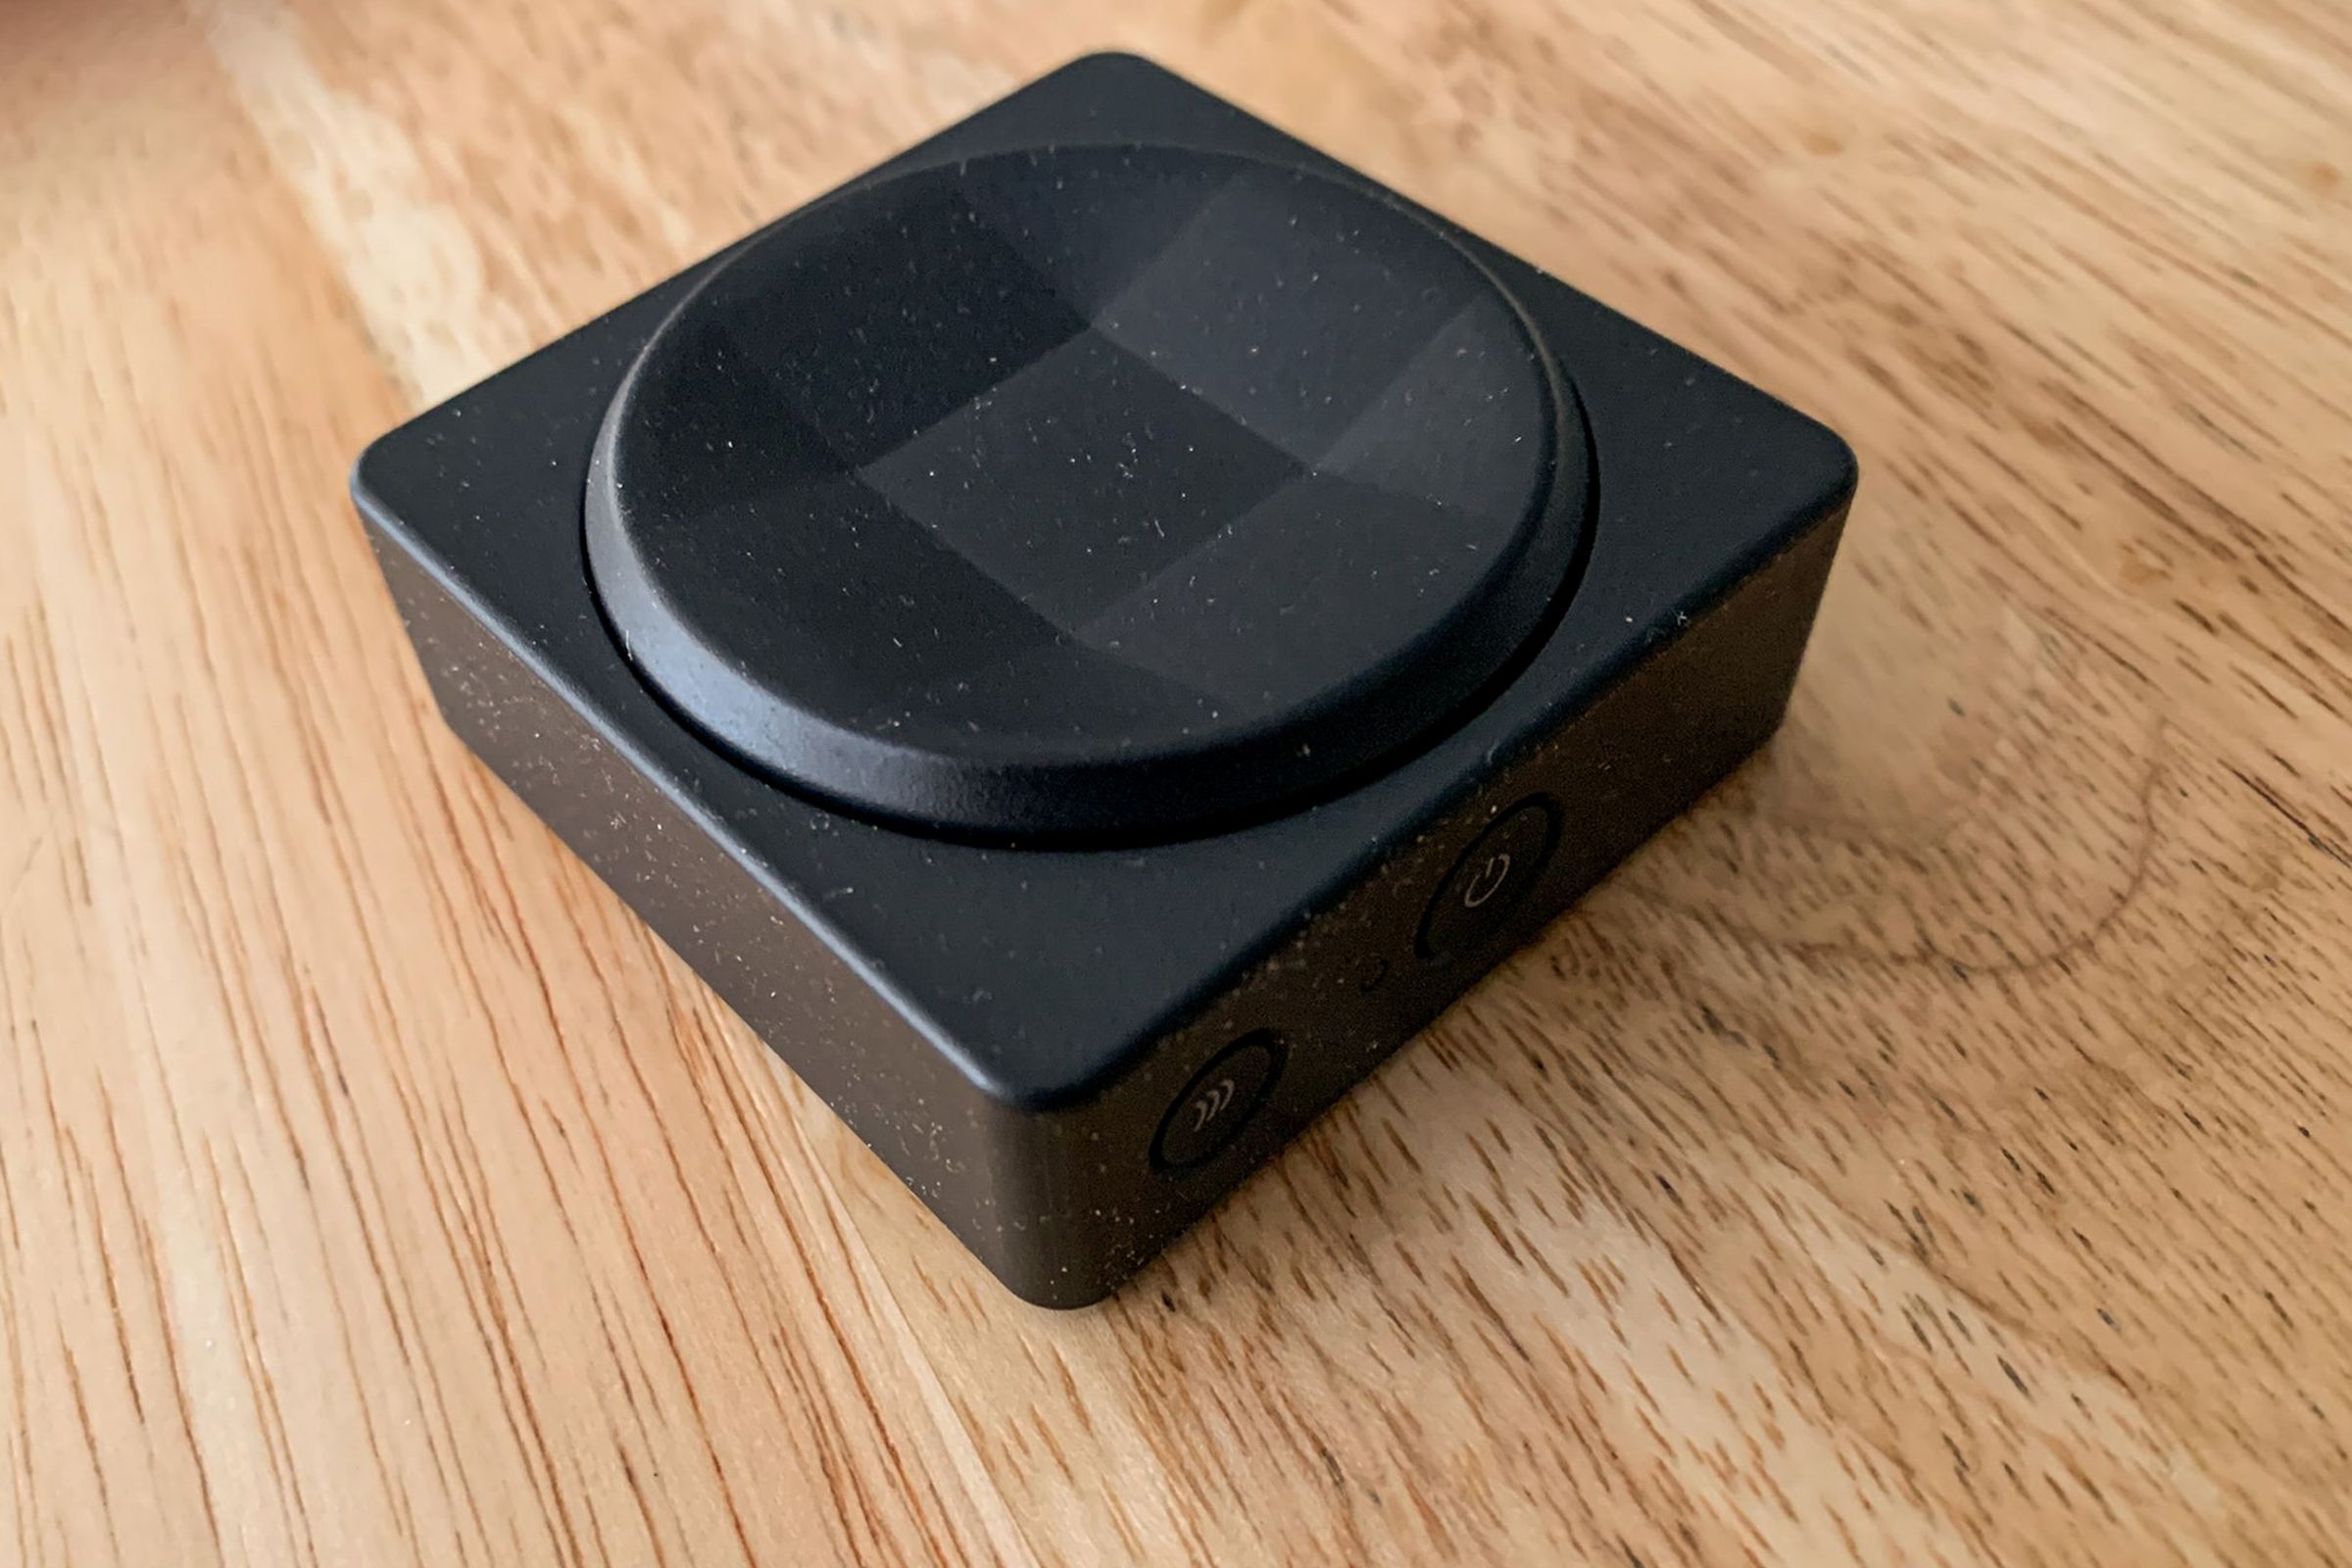 Microsoft D-pad adaptive button.